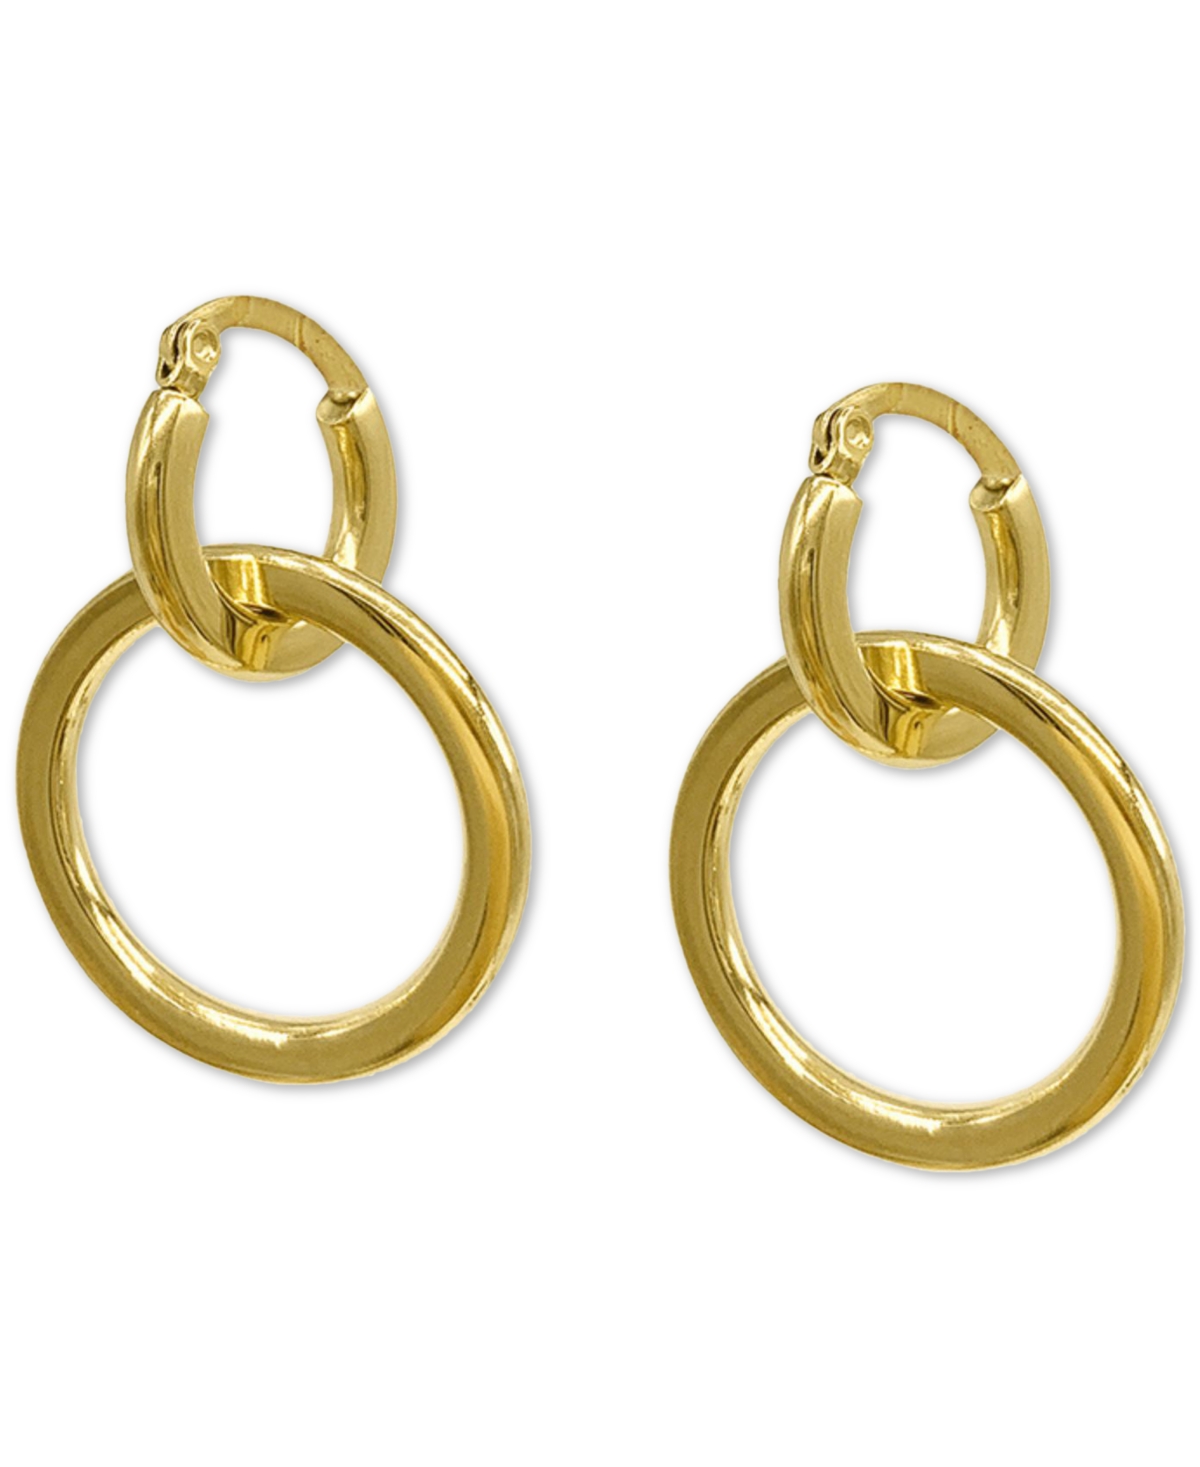 Dangle Hoops Earrings - Yellow Gold-Tone